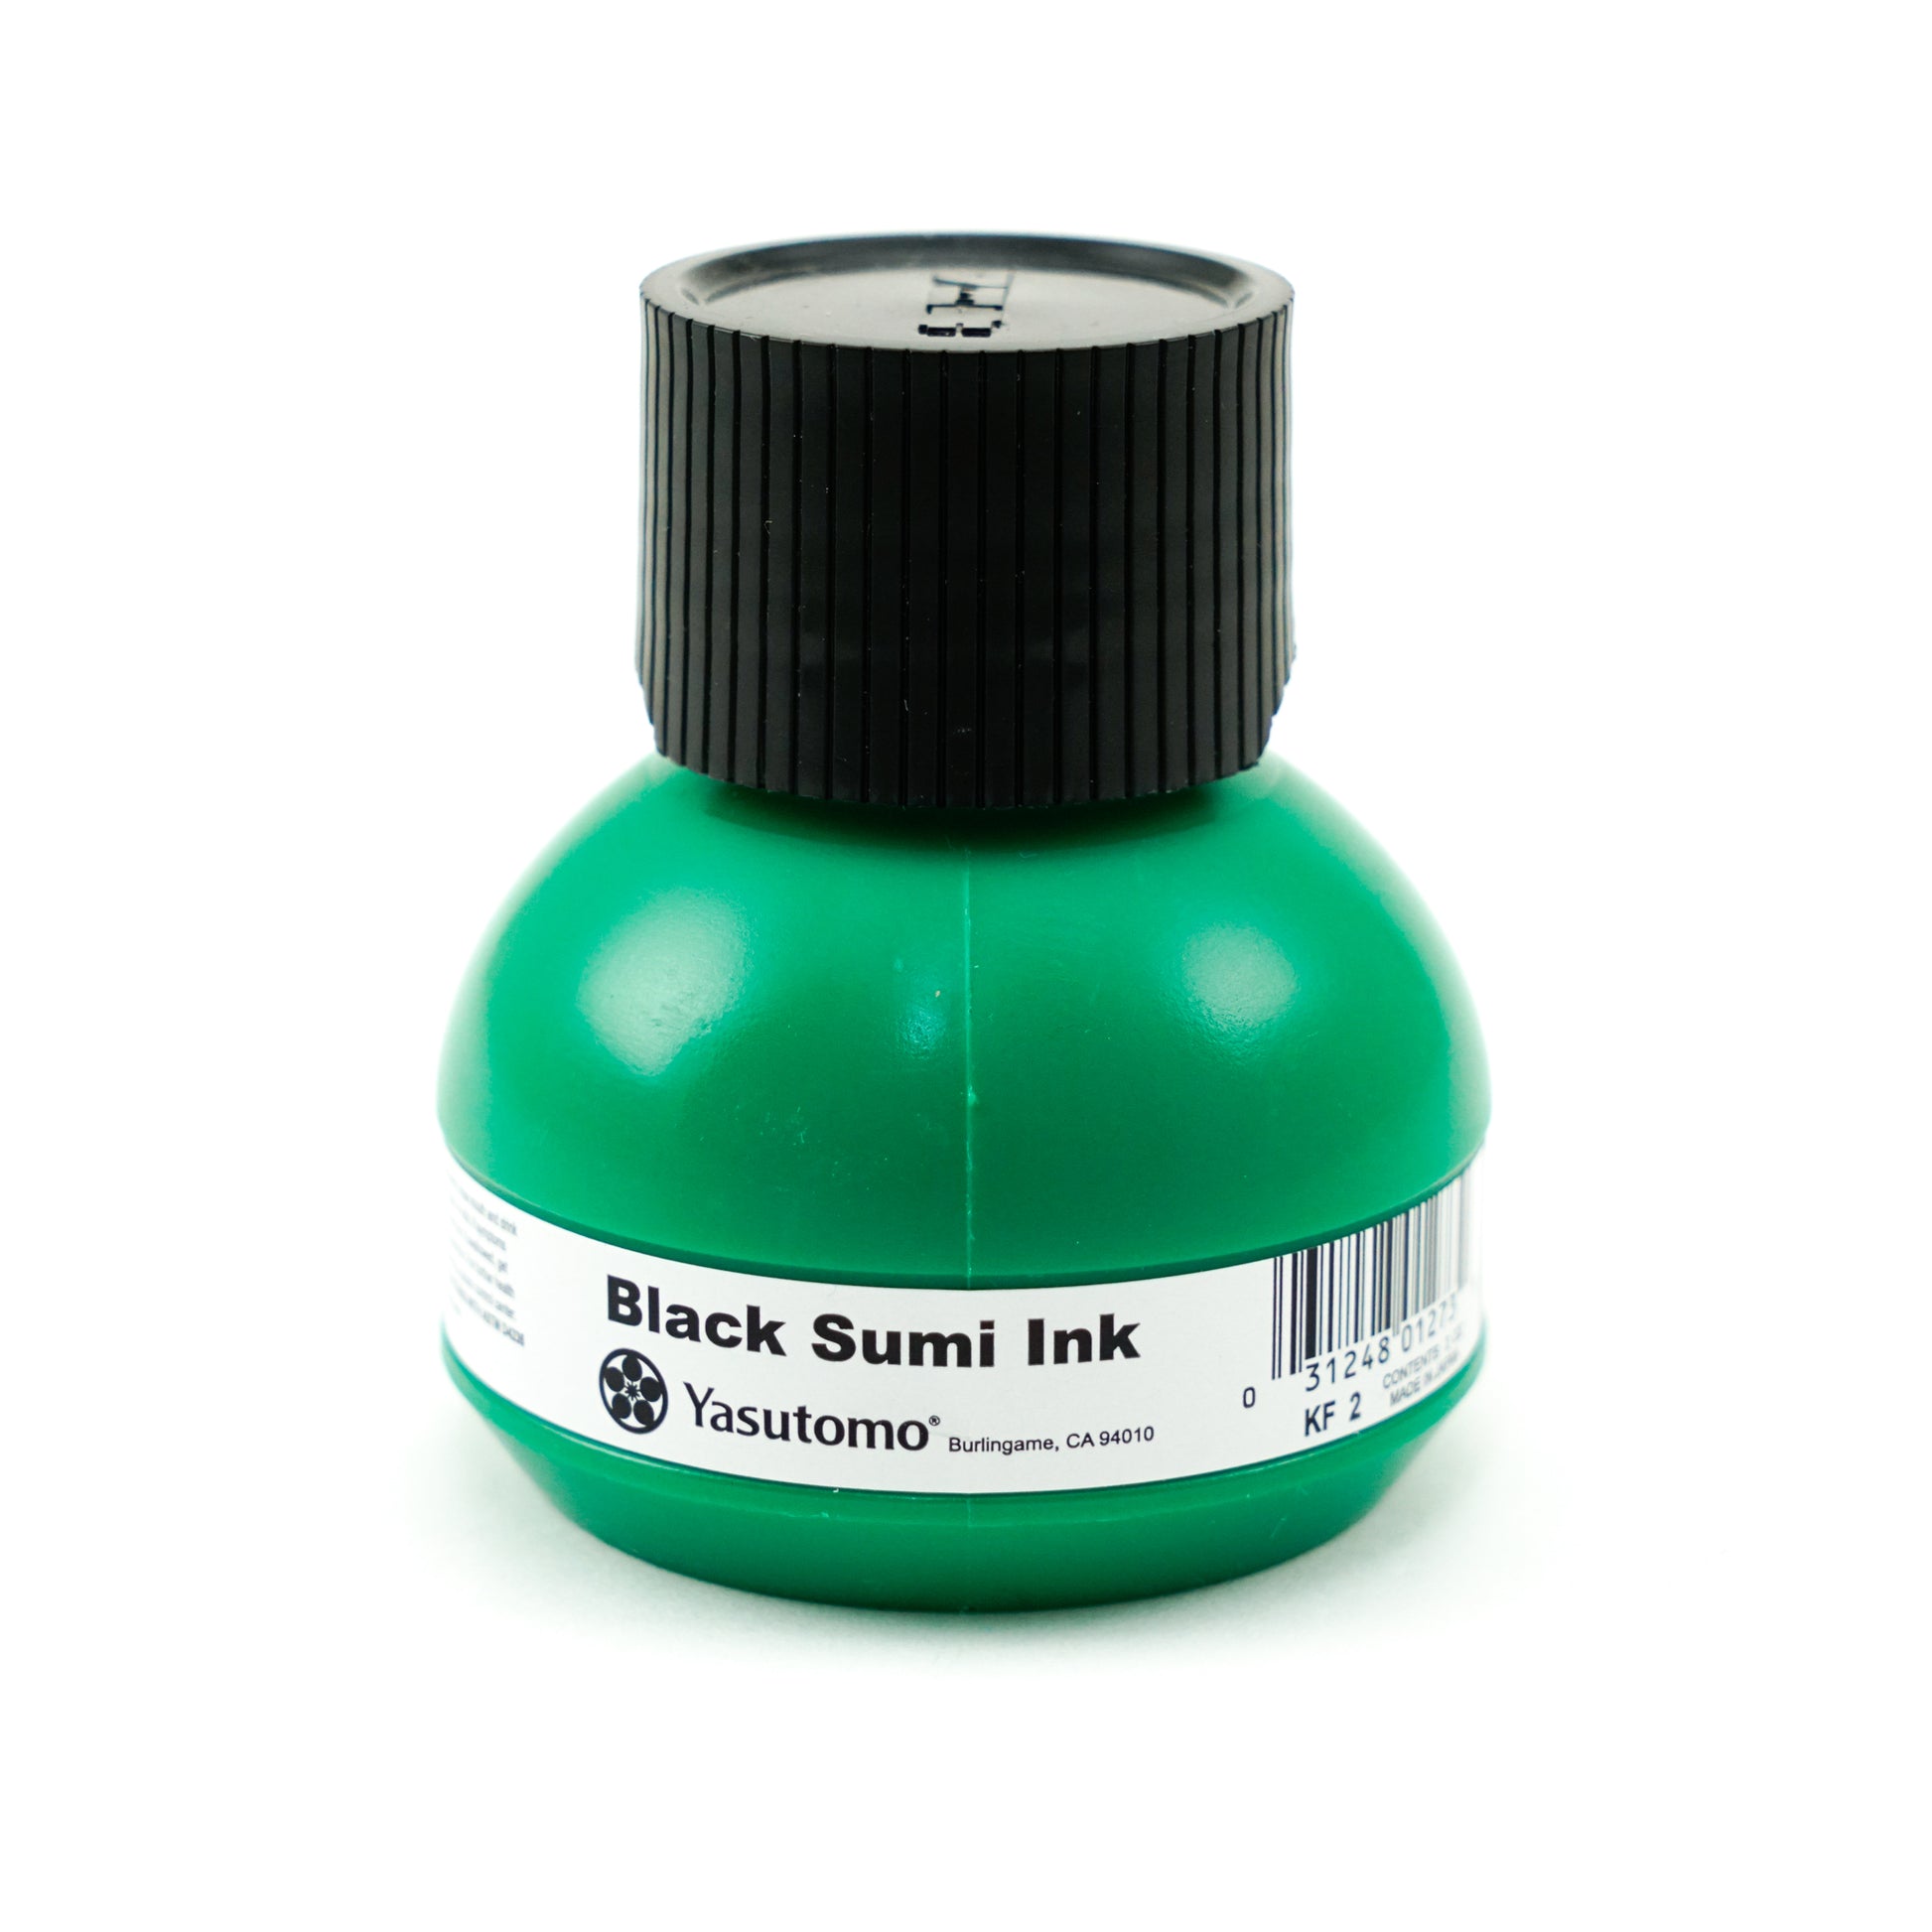 Yasutomo Black Sumi Ink 2oz